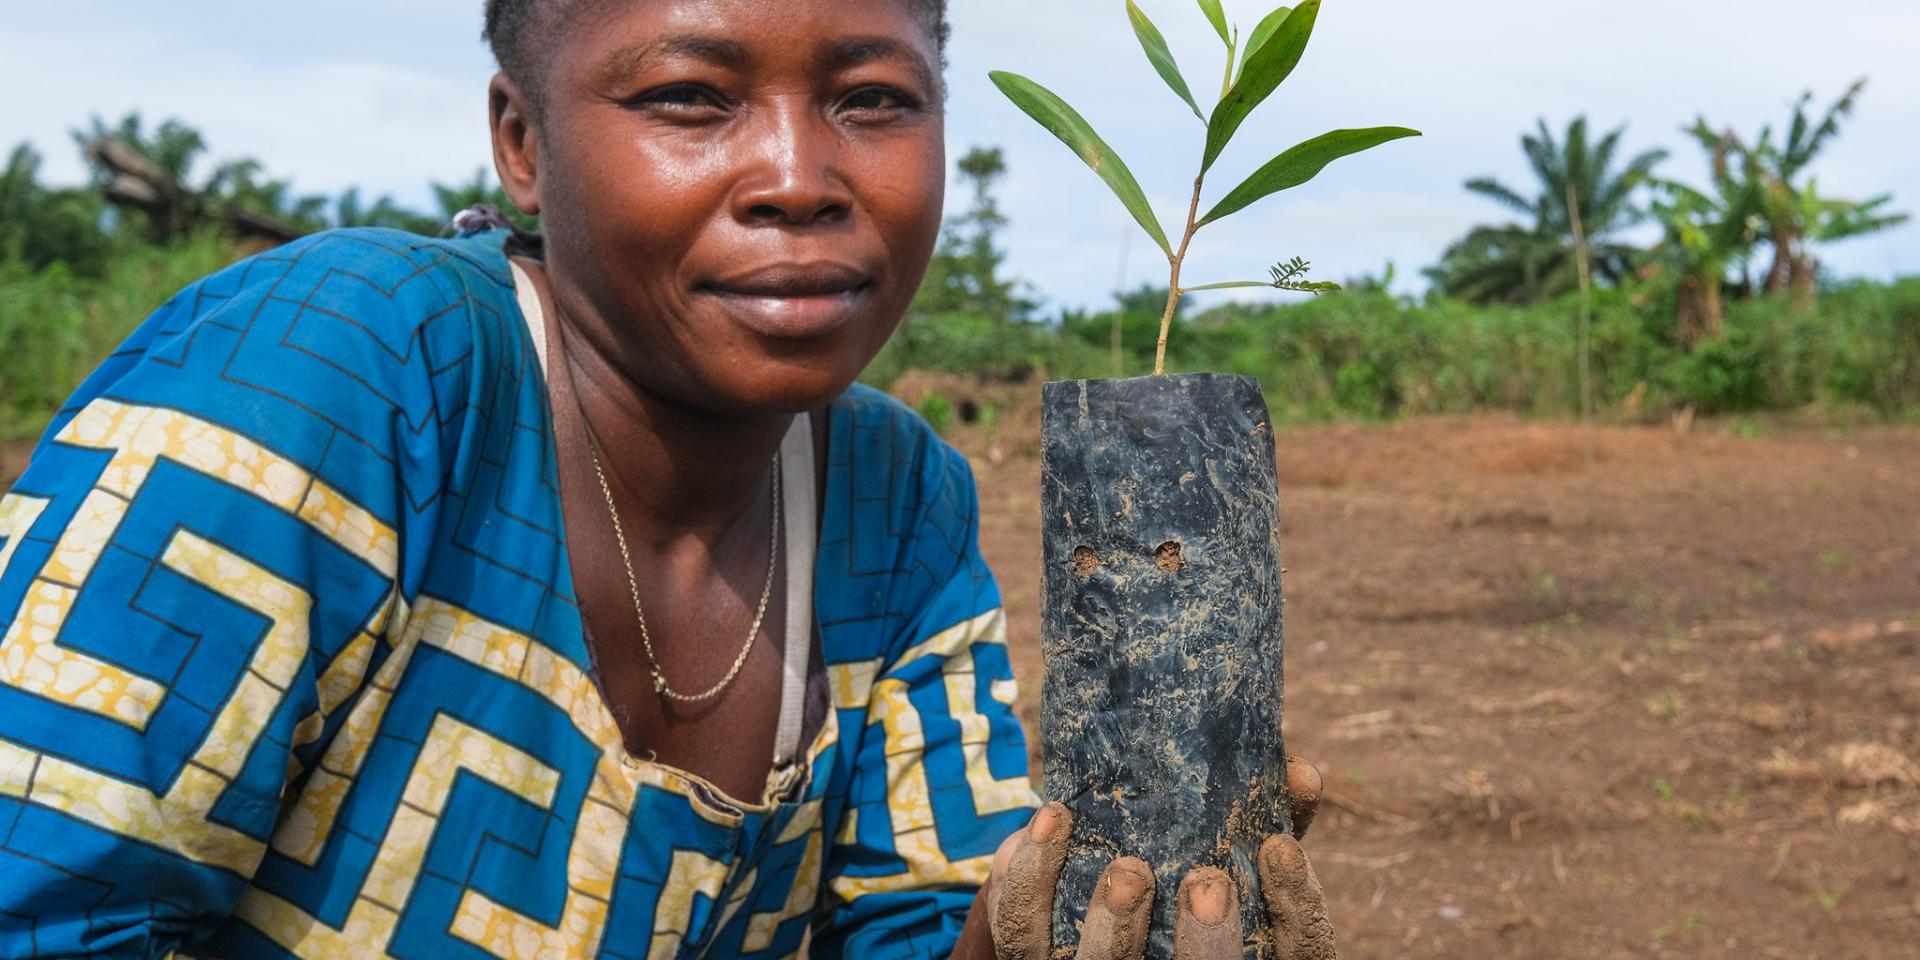 April 2021 acacia plantation near the village of Moussa, Yangambi - DRC.